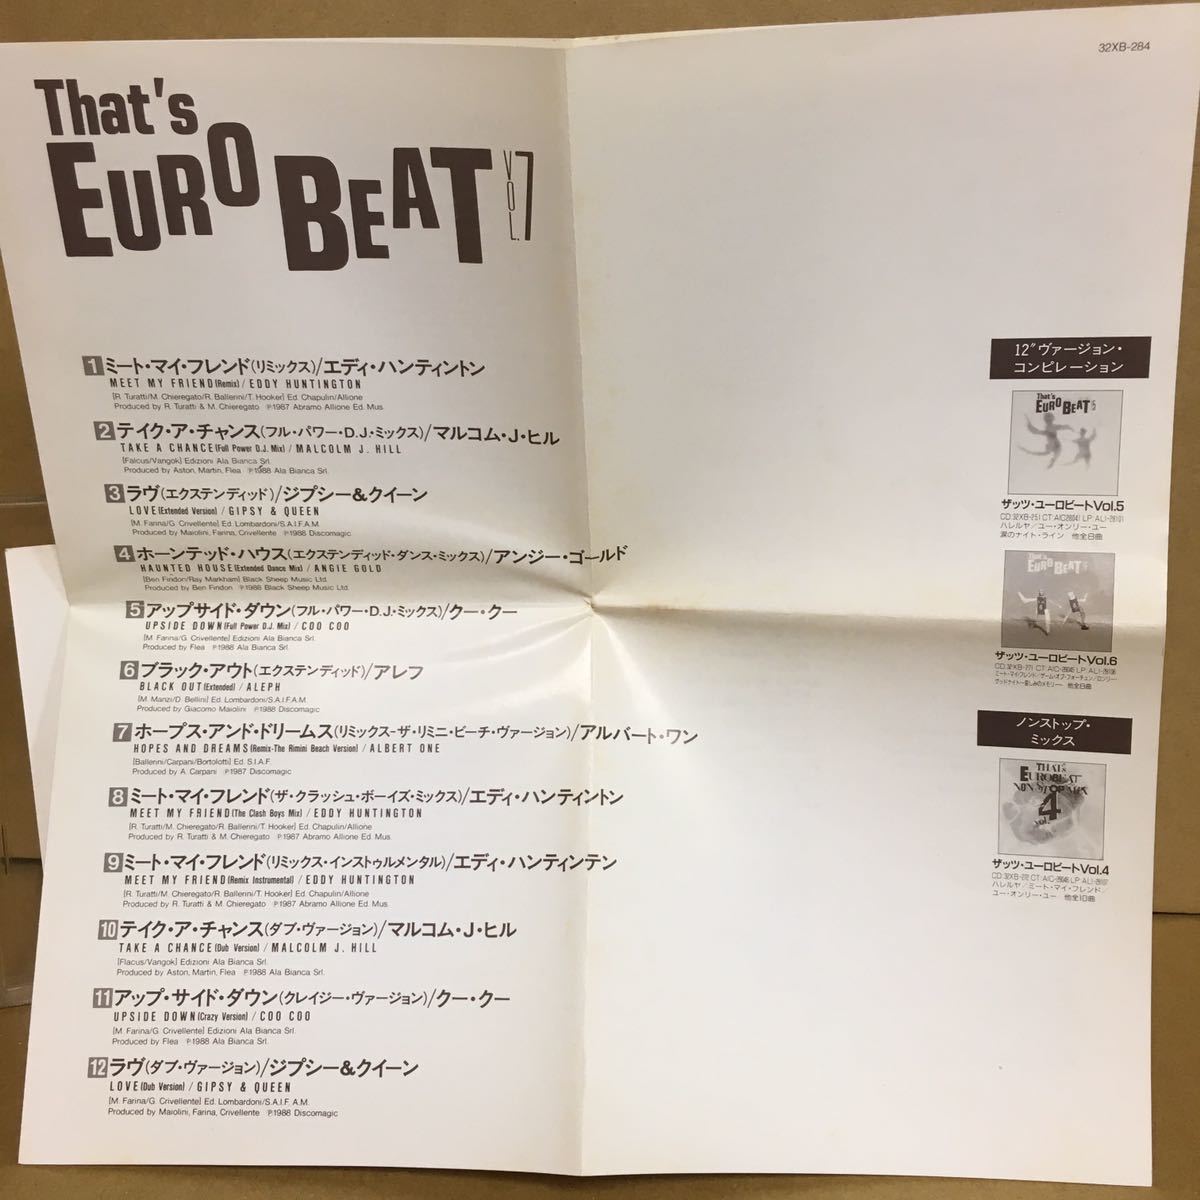 [CD] THAT\'S EUROBEAT Thats euro beat VOL.7 * MEET MY FRIEND (CLASH BOYS MIX) / EDDY HUNTINGTON, UPSIDE DOWN / COO COO др. 